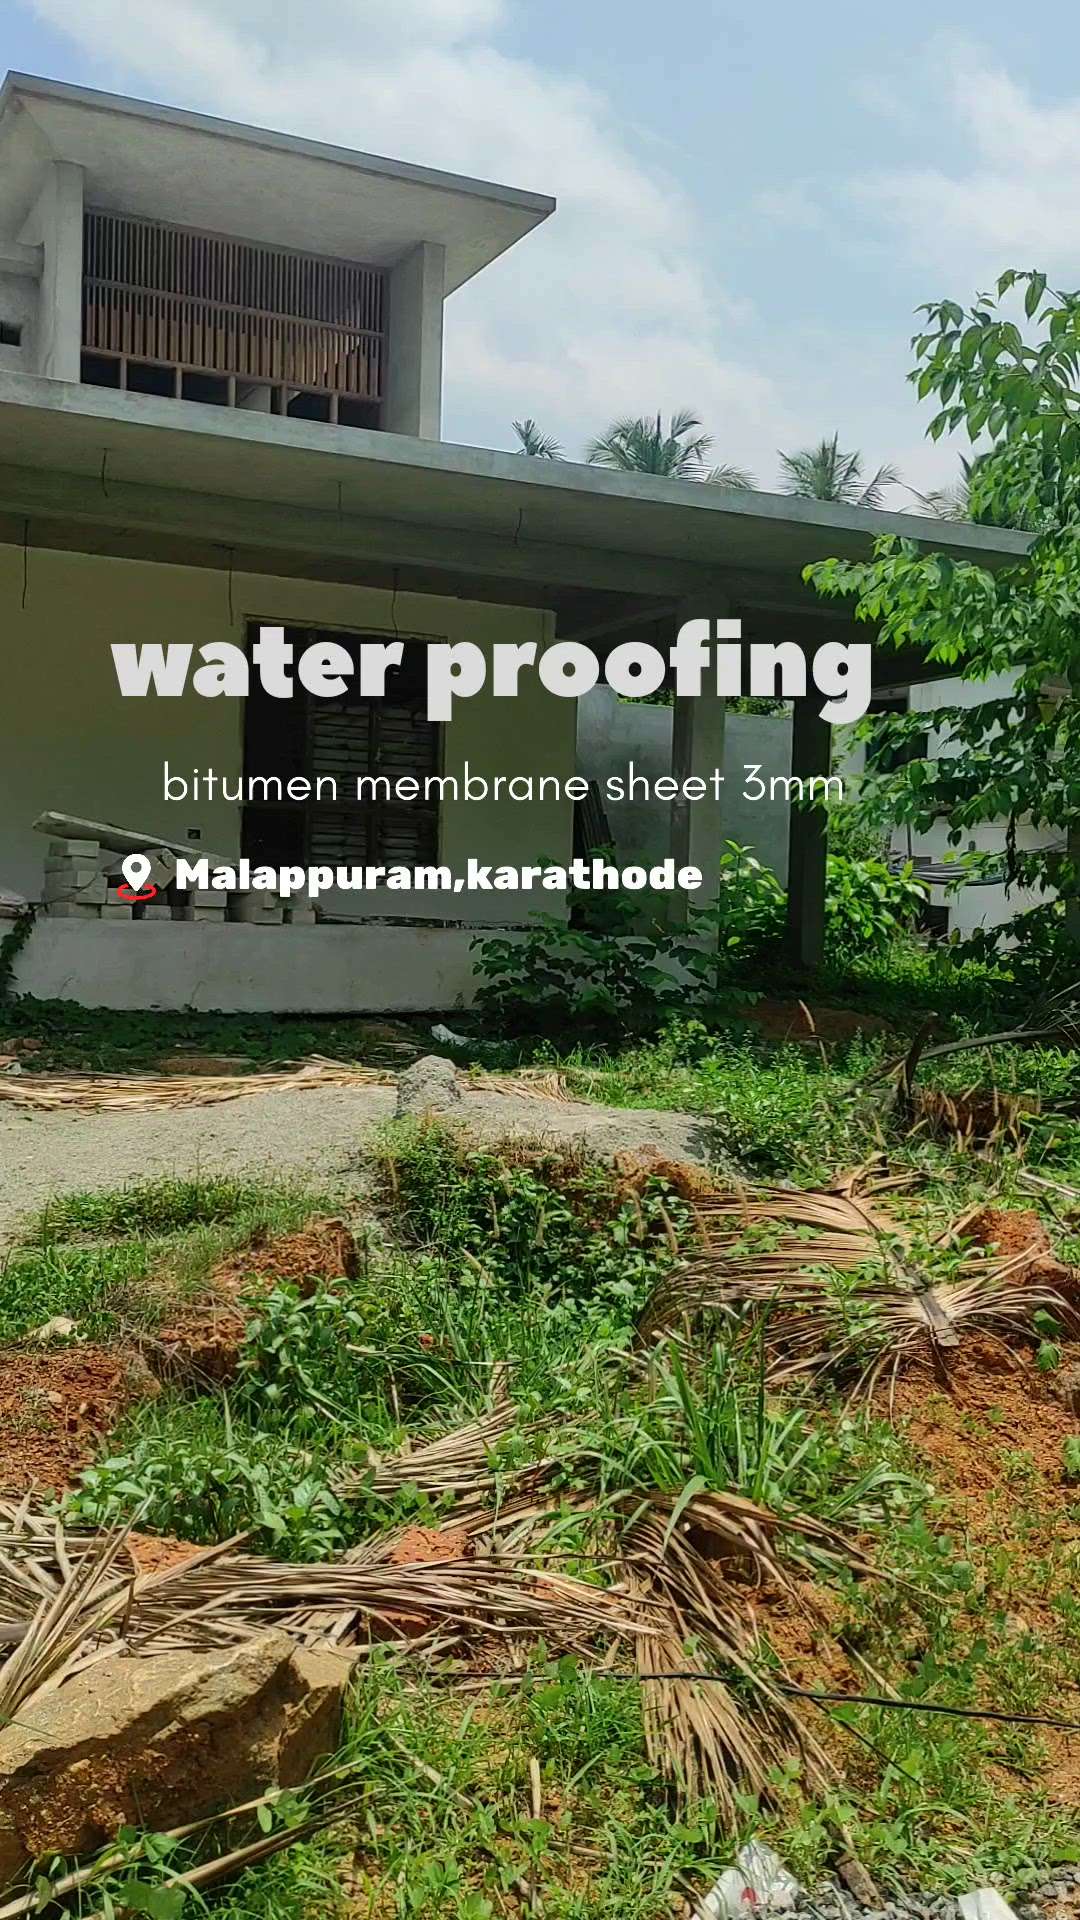 water proofing on going work Malappuram,karathode.

#WaterProofings #WaterProofing #WaterSafety #leakproof  #bathroomwaterproofing #koloapp  #bitumen_coating  #bitumenmembrane  #Bitumin  #KeralaStyleHouse